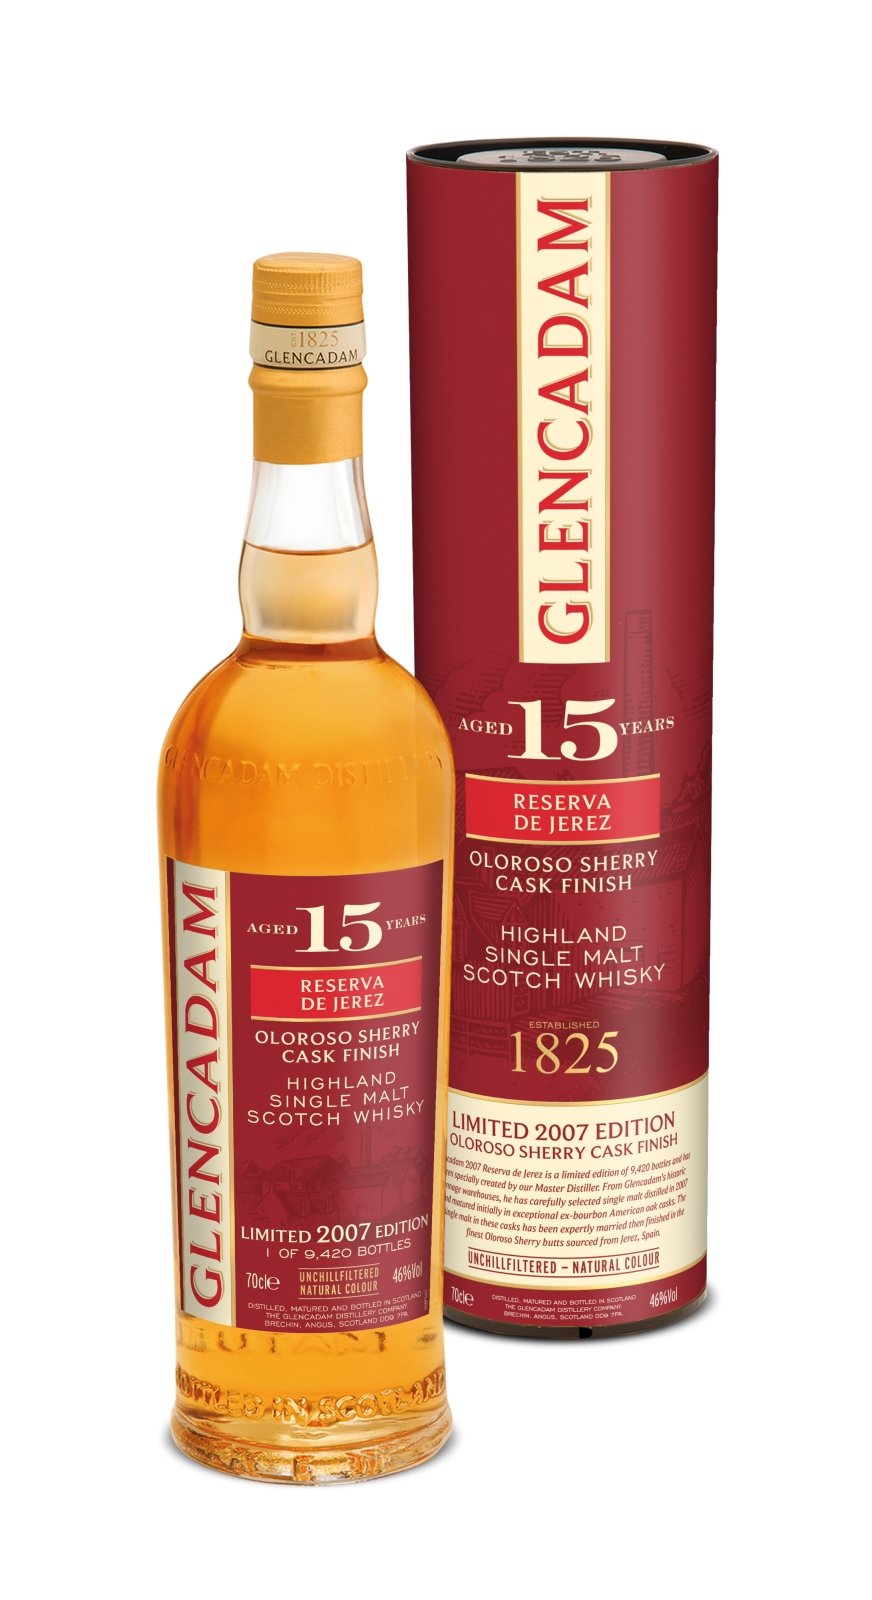 Bottle of Glencadam 15-Year-Old Reserva de Jerez, 2007 Oloroso Sherry Cask Finish, Highland Single Malt Scotch Whisky, 46%